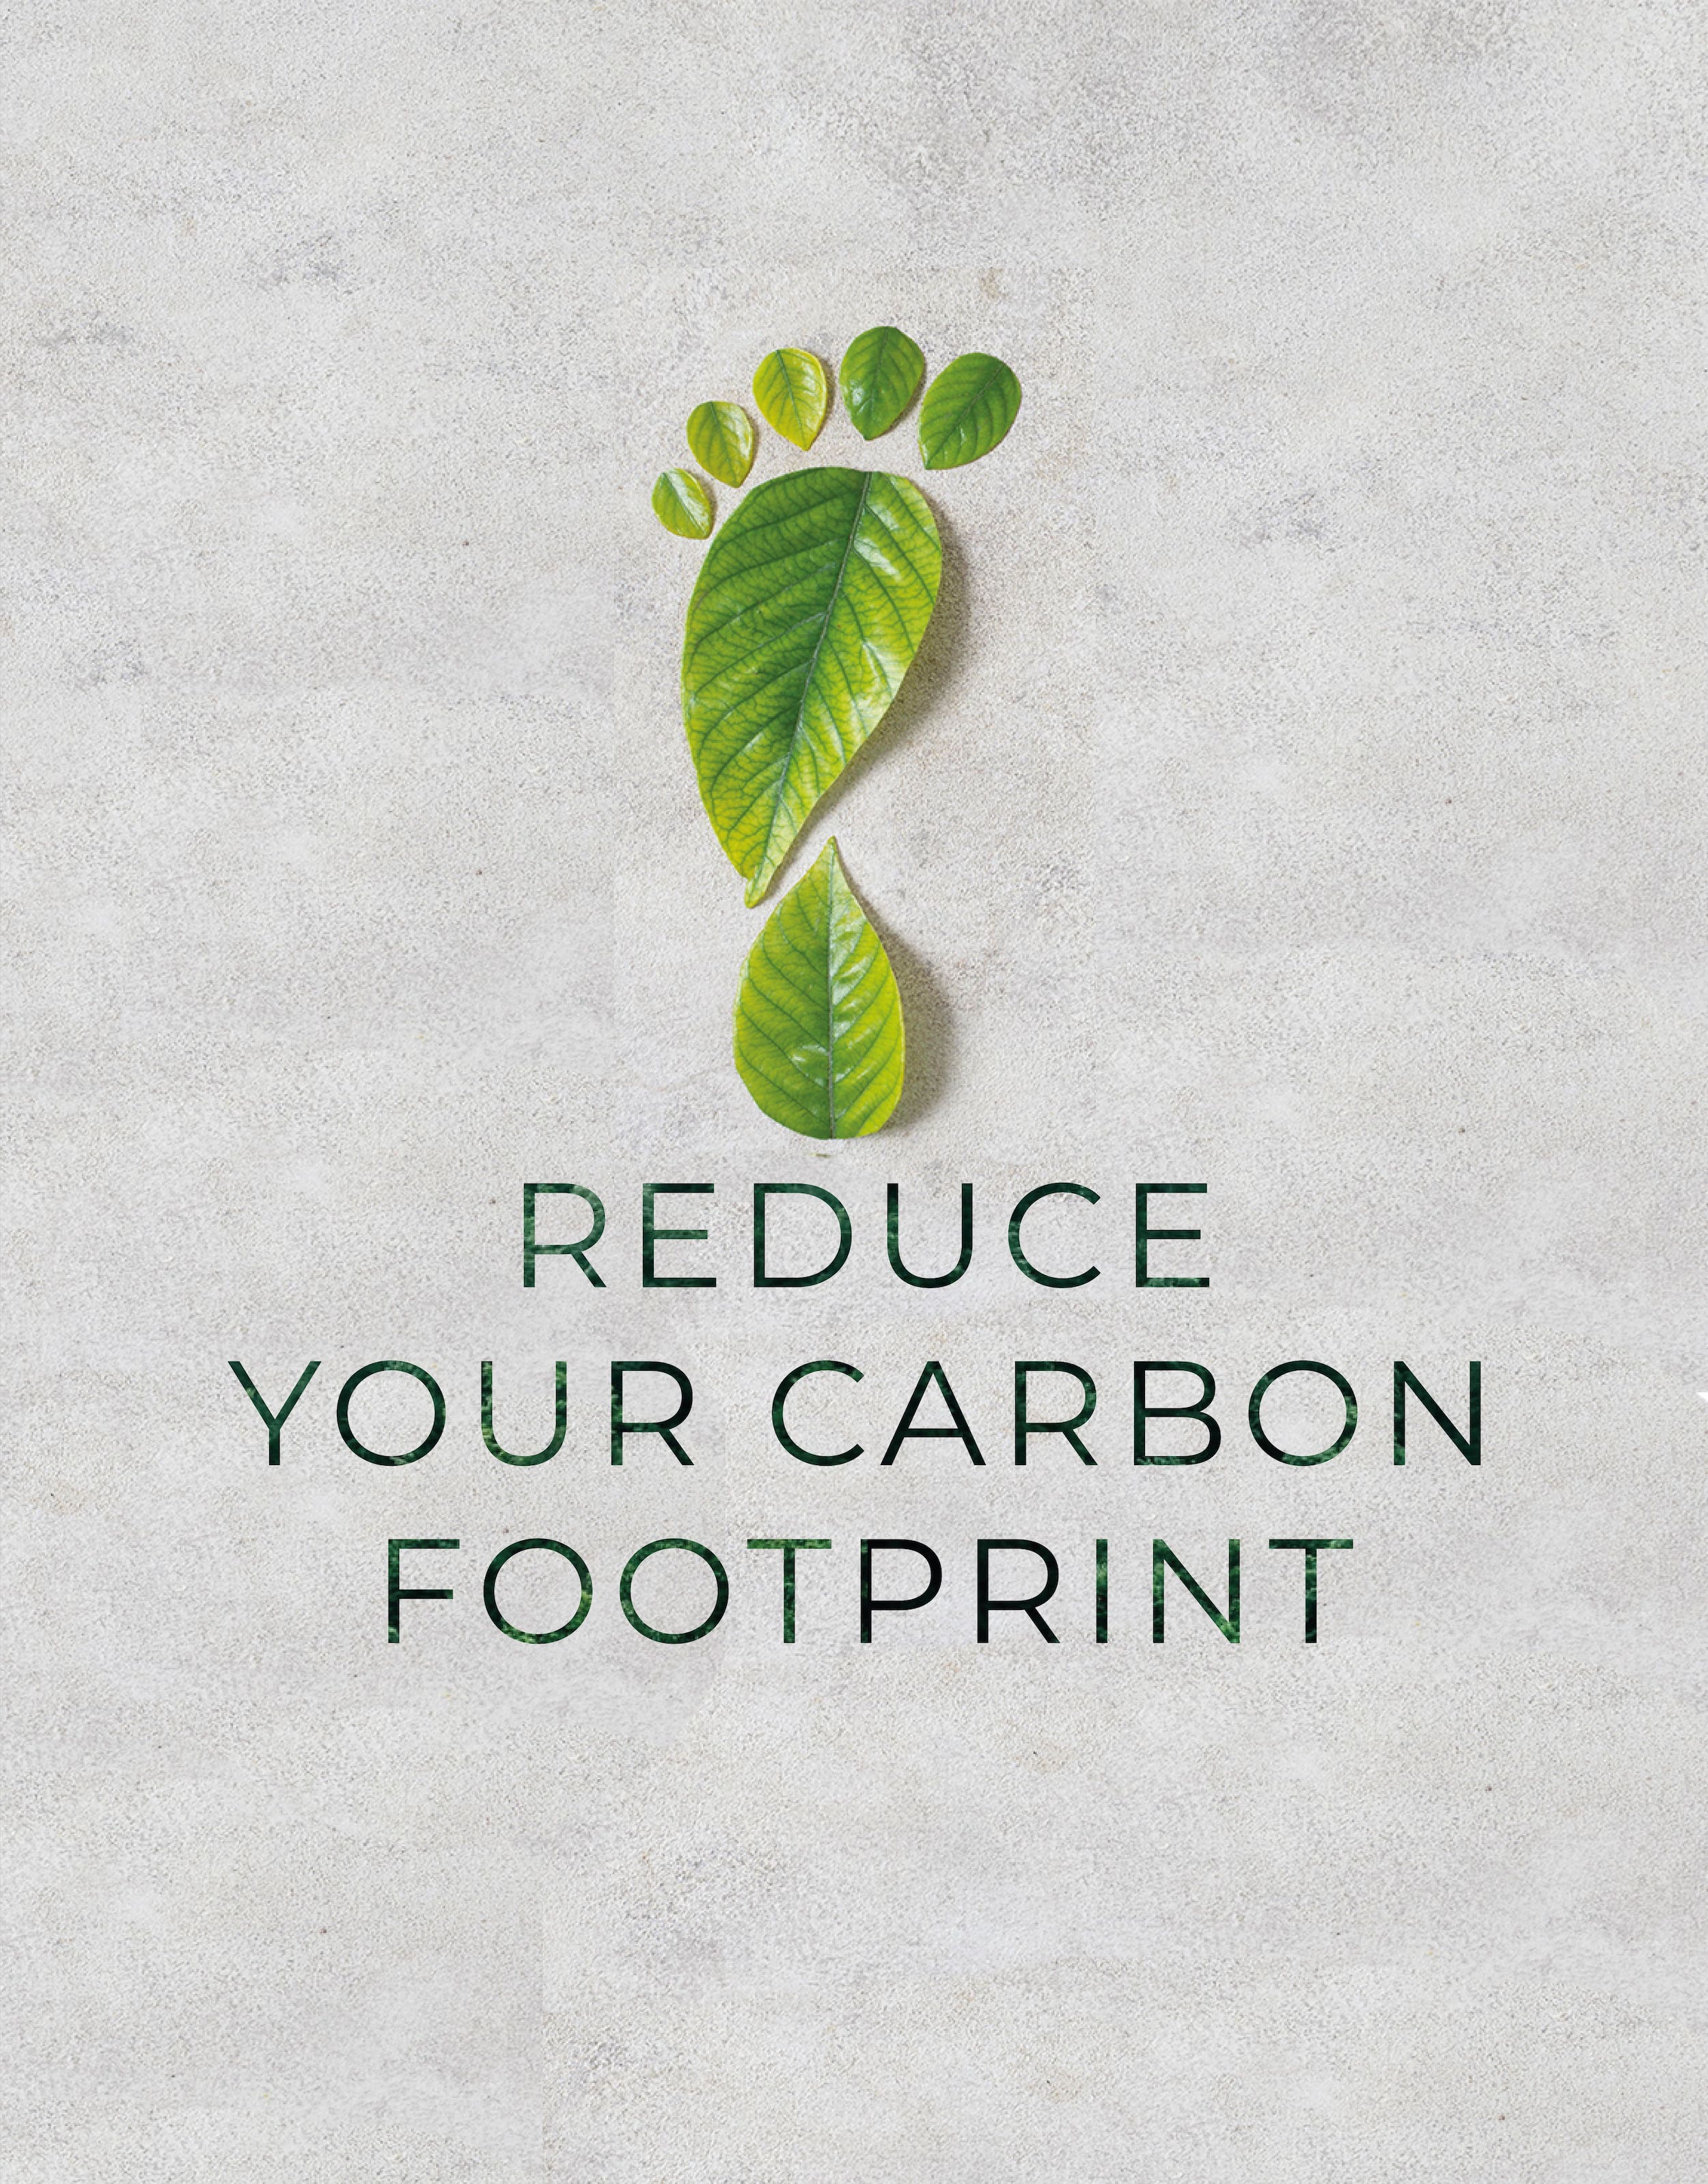 Reduce_Carbon_Footprint-02-min.jpg